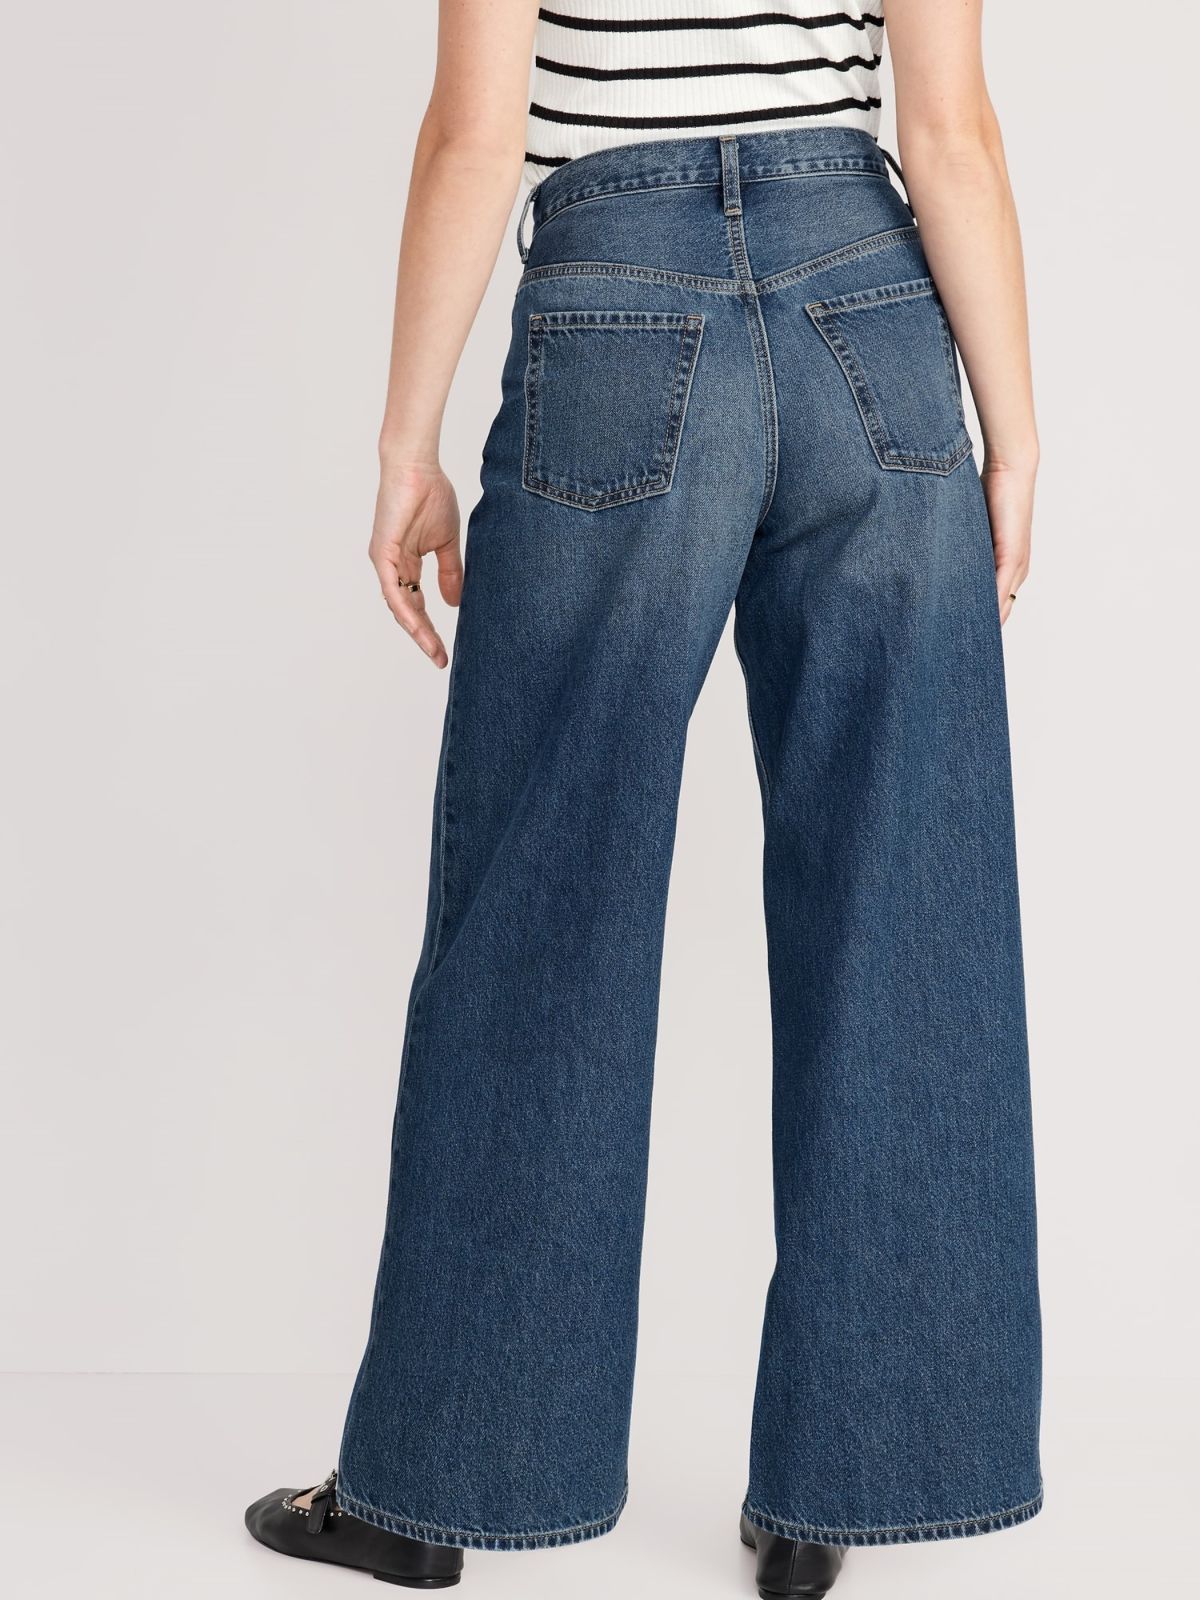  ג'ינס בגזרה רחבה של OLD NAVY